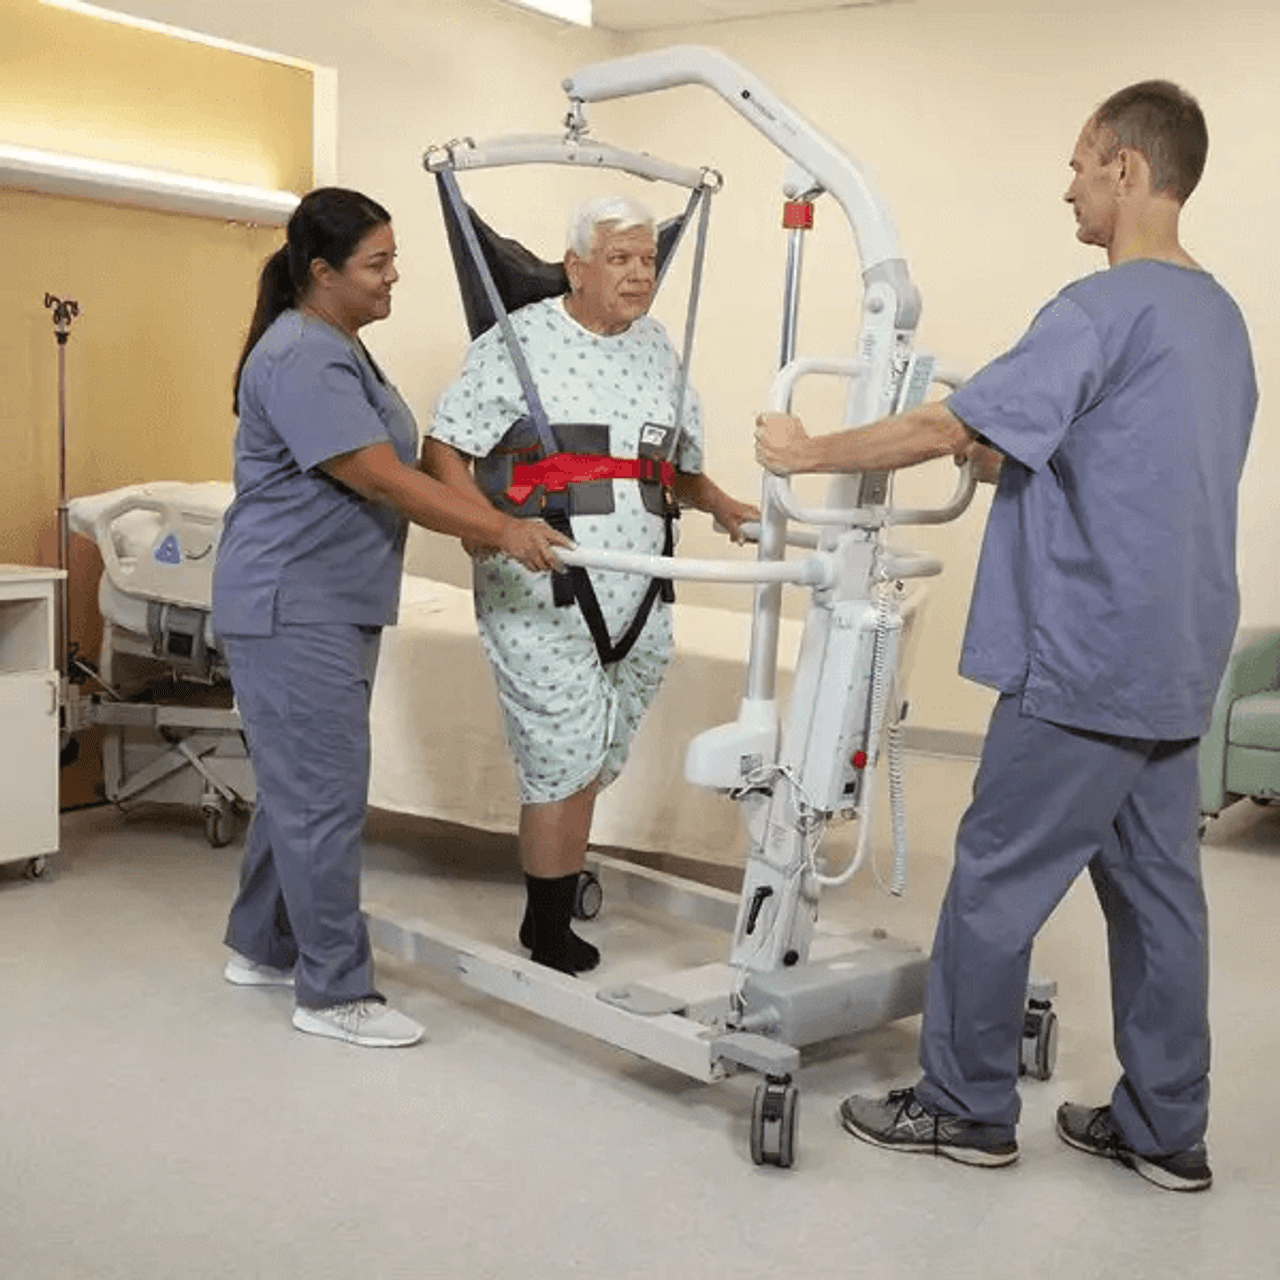 FGA-700 Bariatric Mobile Floor Lift 700lbs Capacity, Versatile Patient Transfers-Chicken Pieces